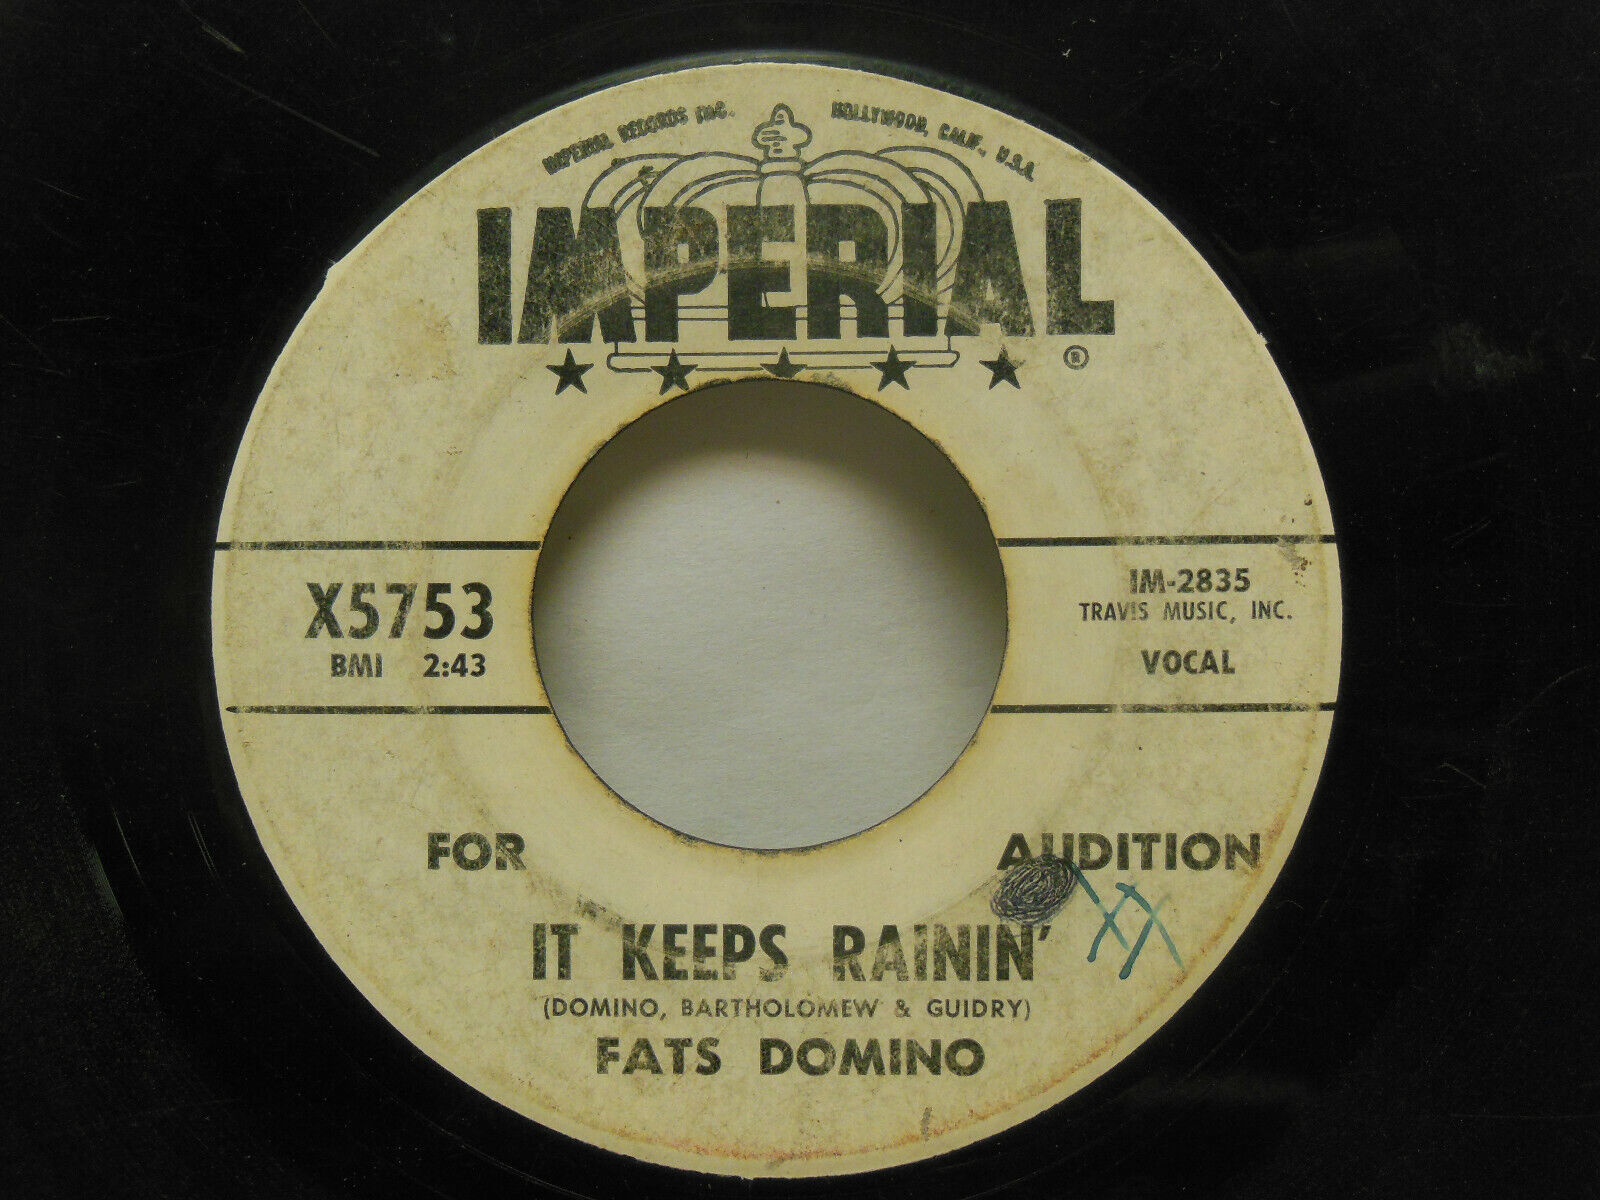 Rare Audition Copy! Fats Domino: It Keeps Rainin' / I Just Cry 45 RPM. Fair (B) 